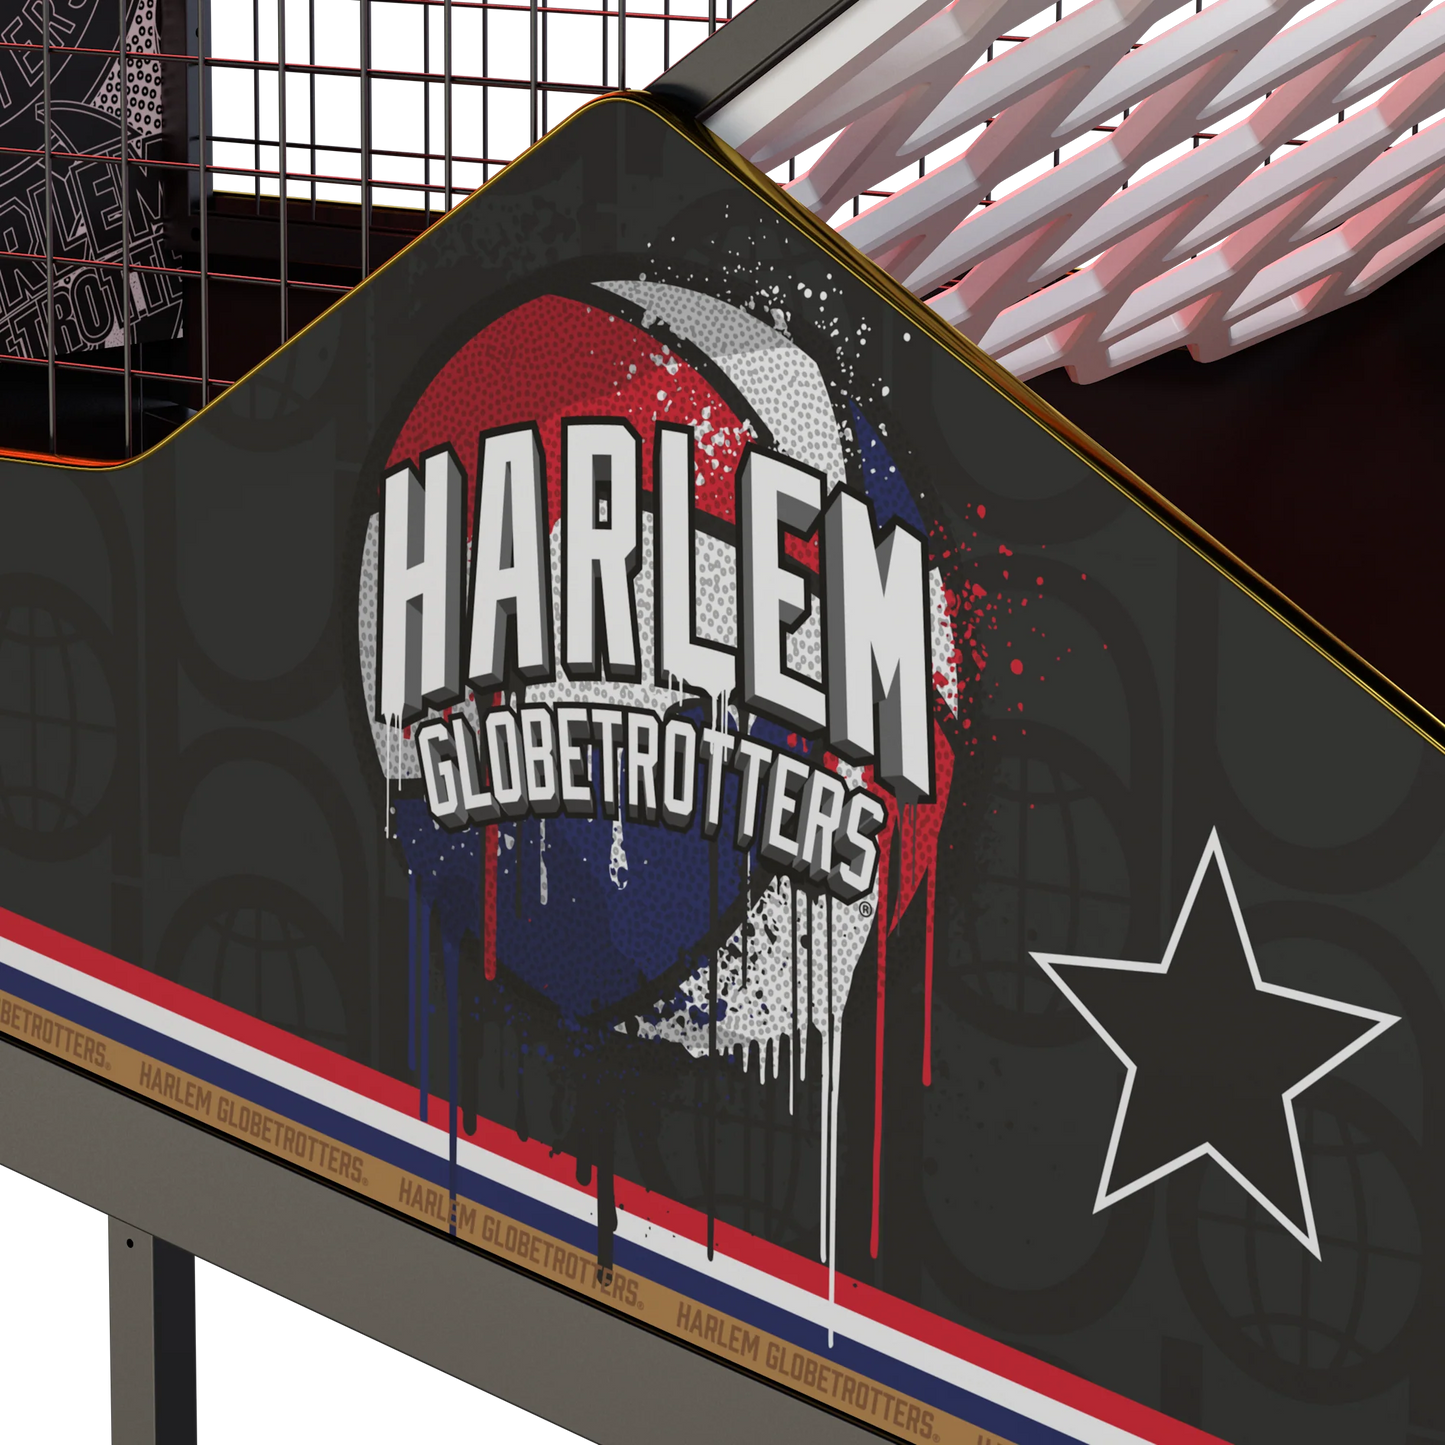 Harlem Globetrotters "MODERN" Scheme Basketball Arcade with Floor Mat - Prime Arcades Inc